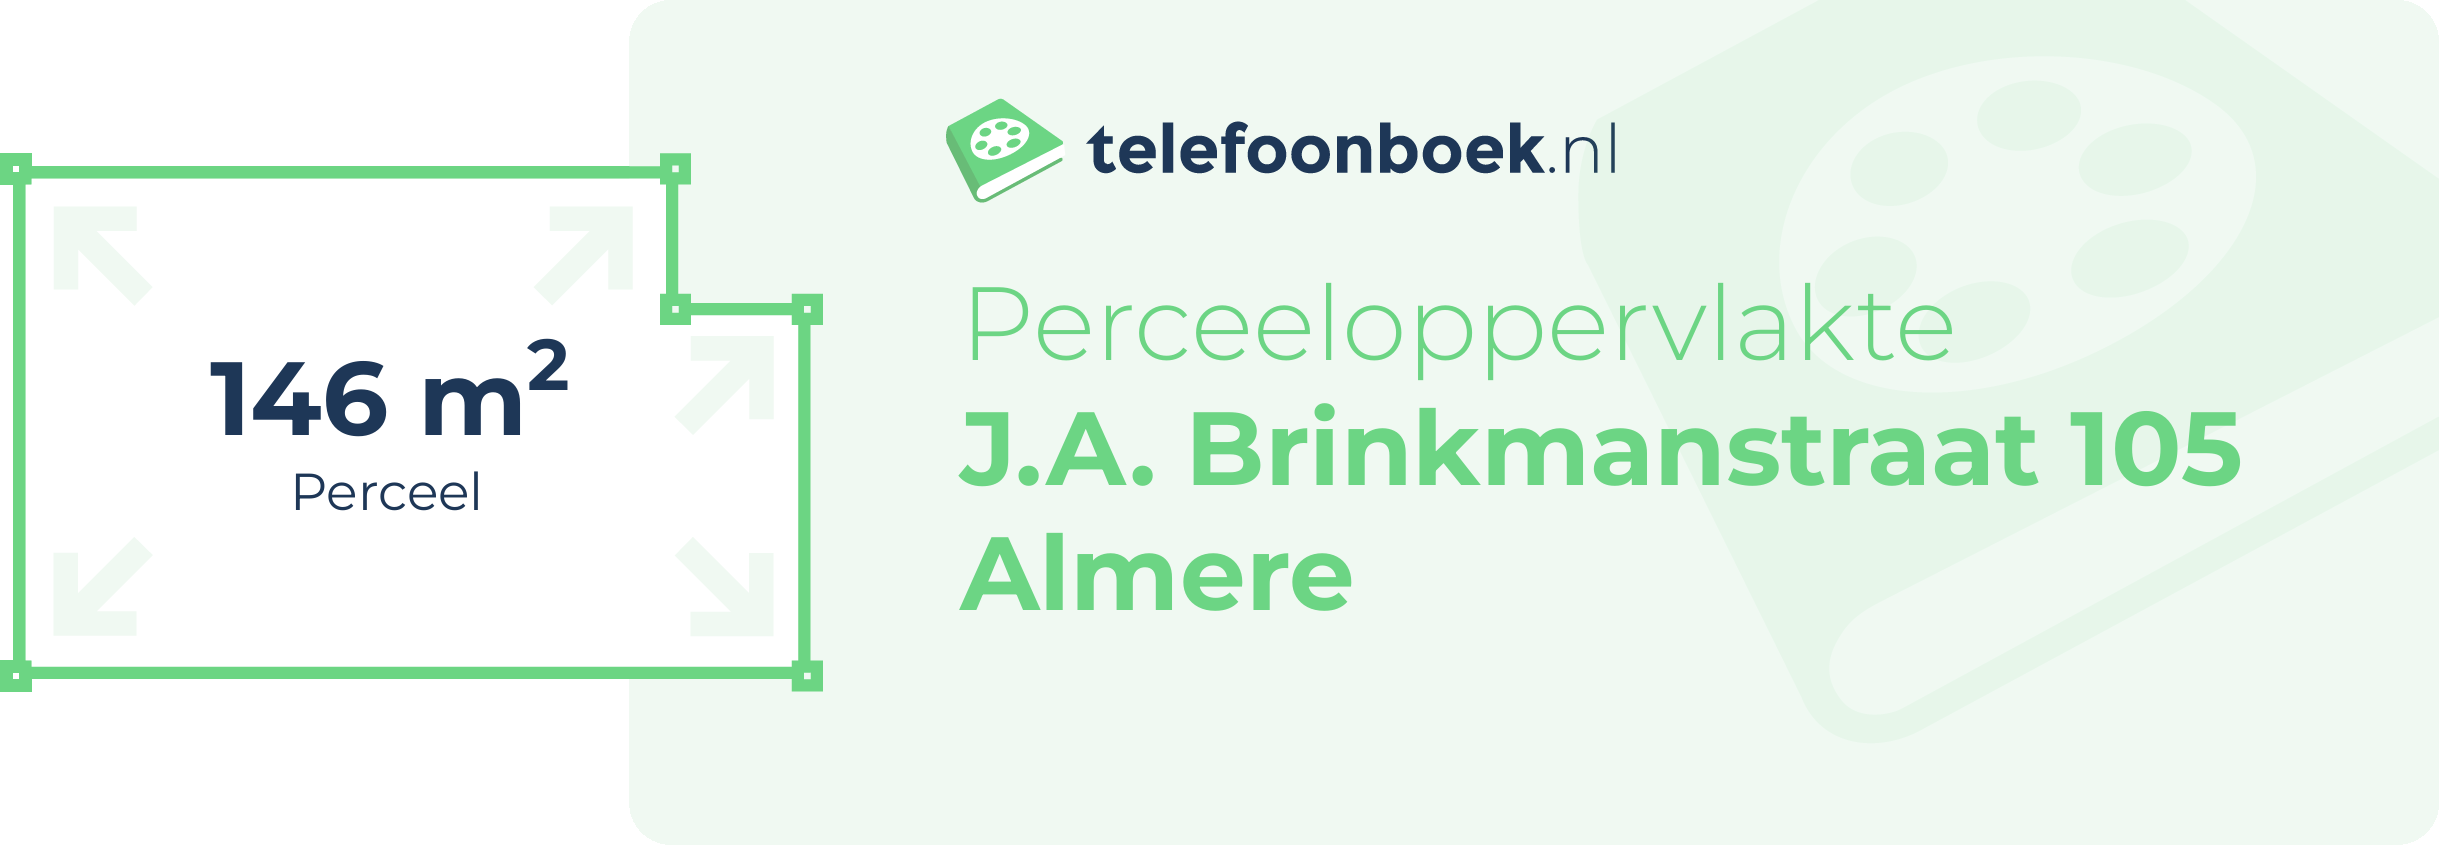 Perceeloppervlakte J.A. Brinkmanstraat 105 Almere